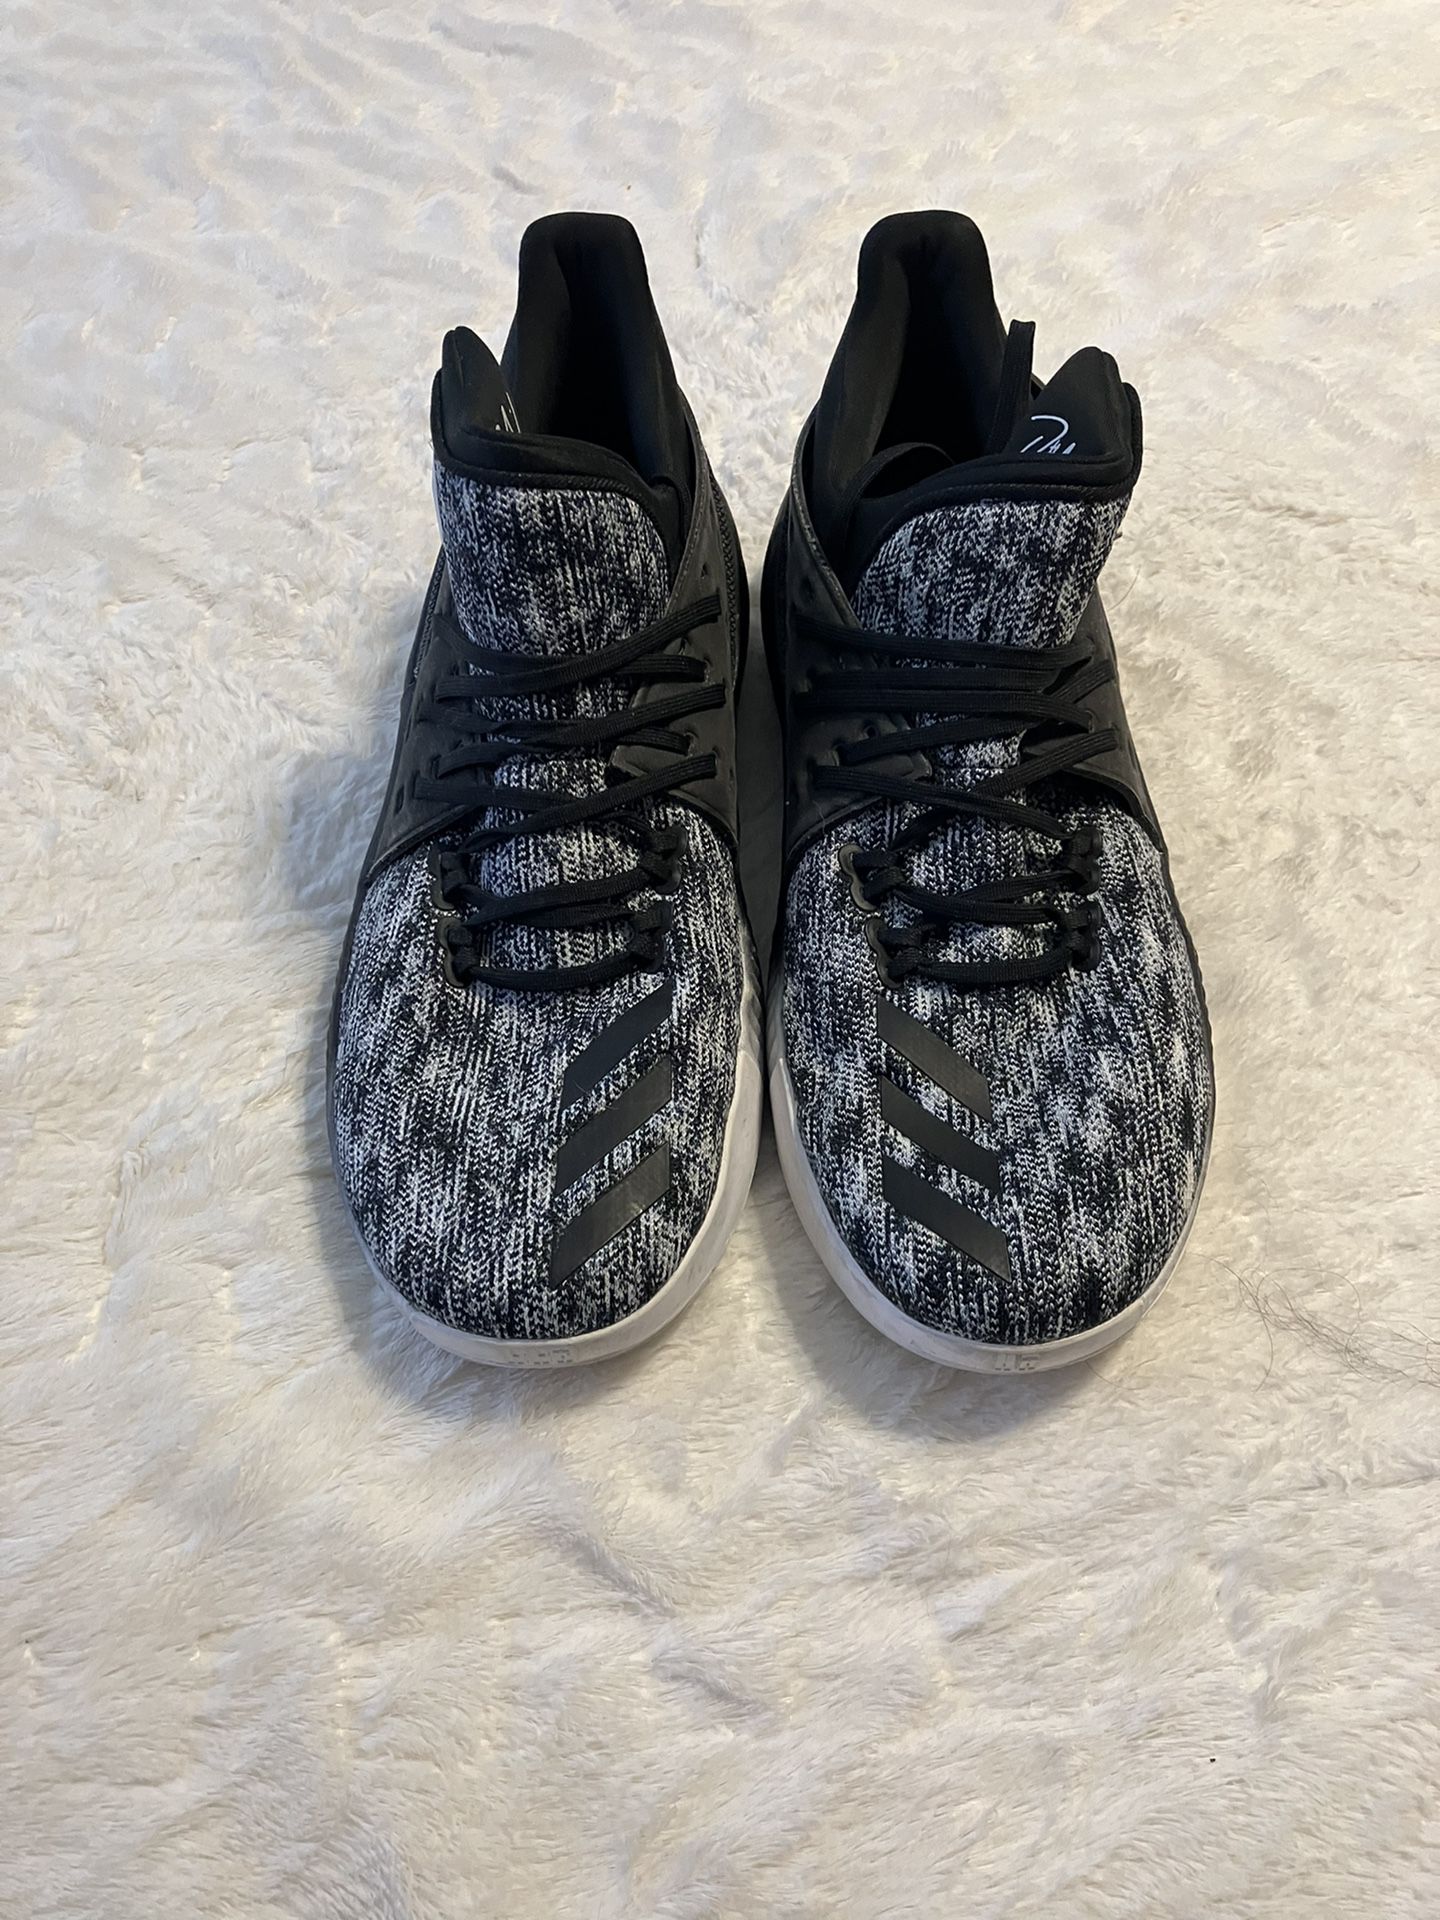 Damian Lillard Basketball Shoes (11.5)